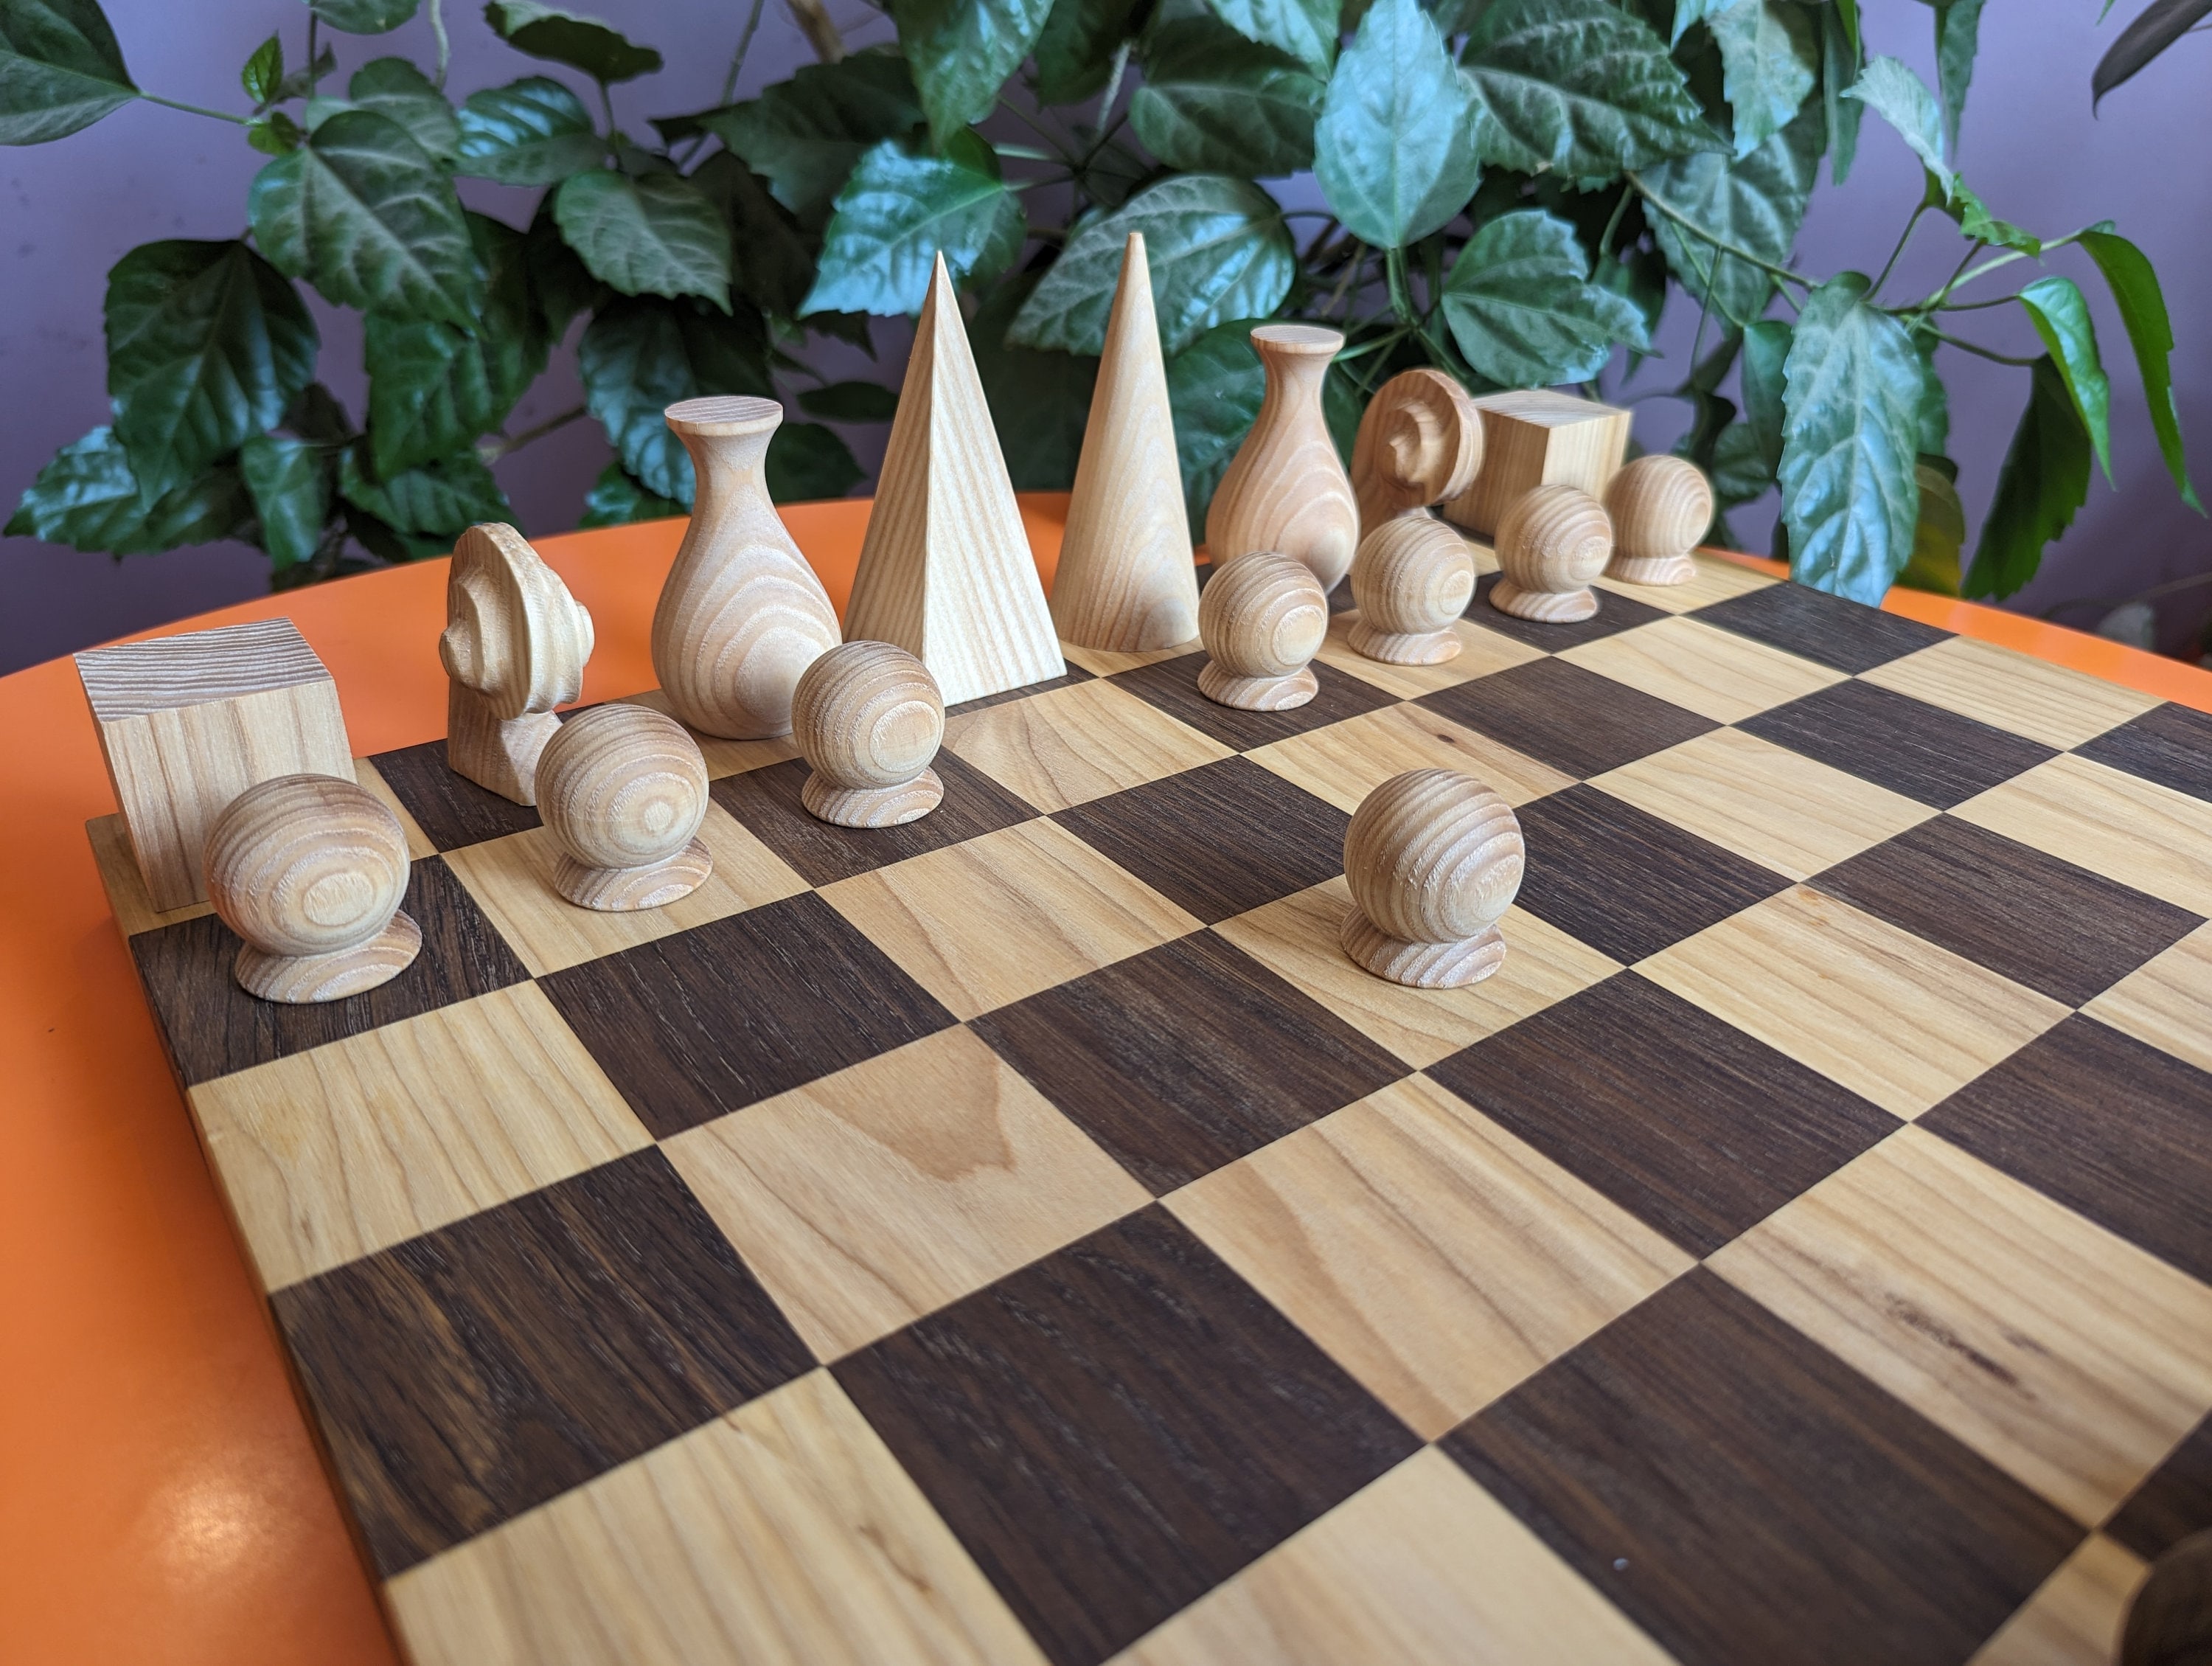 12 Games Like CT-ART: Similar Chess Games 2023